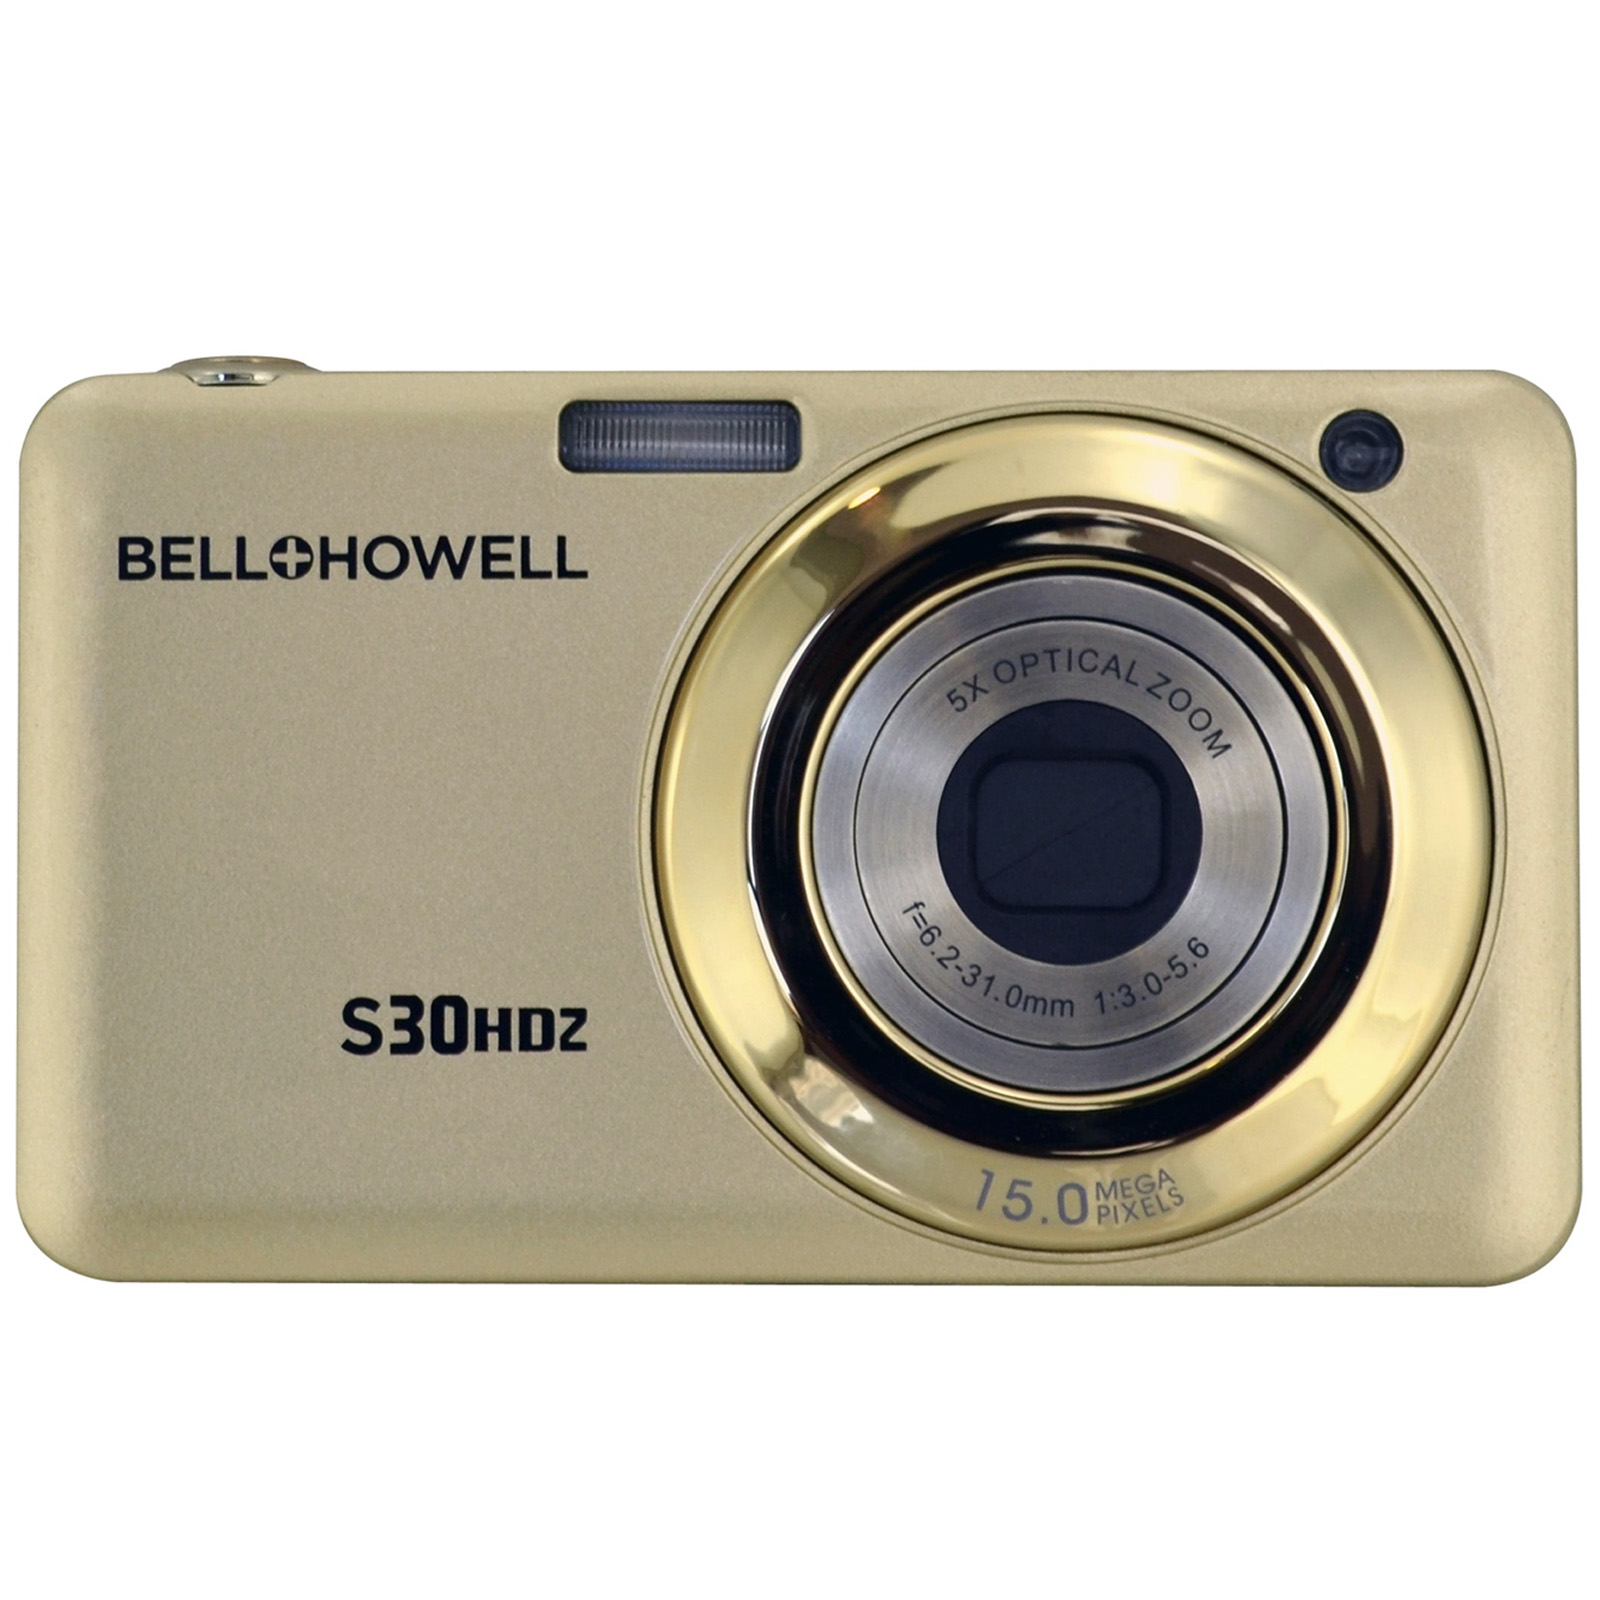 Bell+howell 15MP Digital Camera w/5x Optical Zoom & HD Video (Champagne)